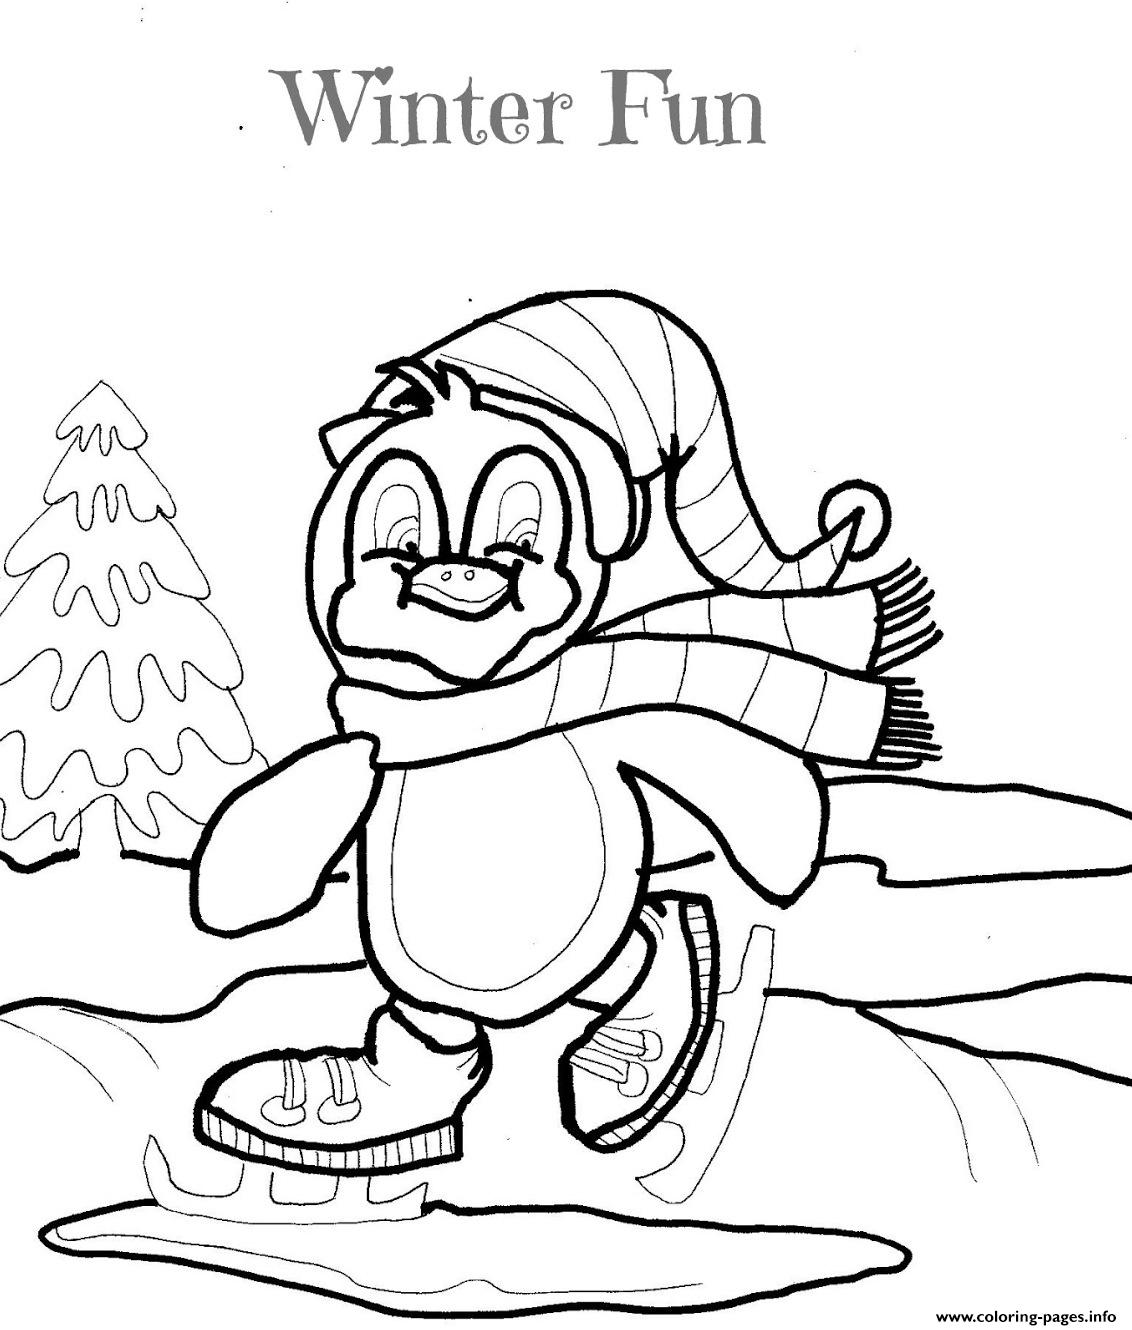 Winter Funbdcb coloring